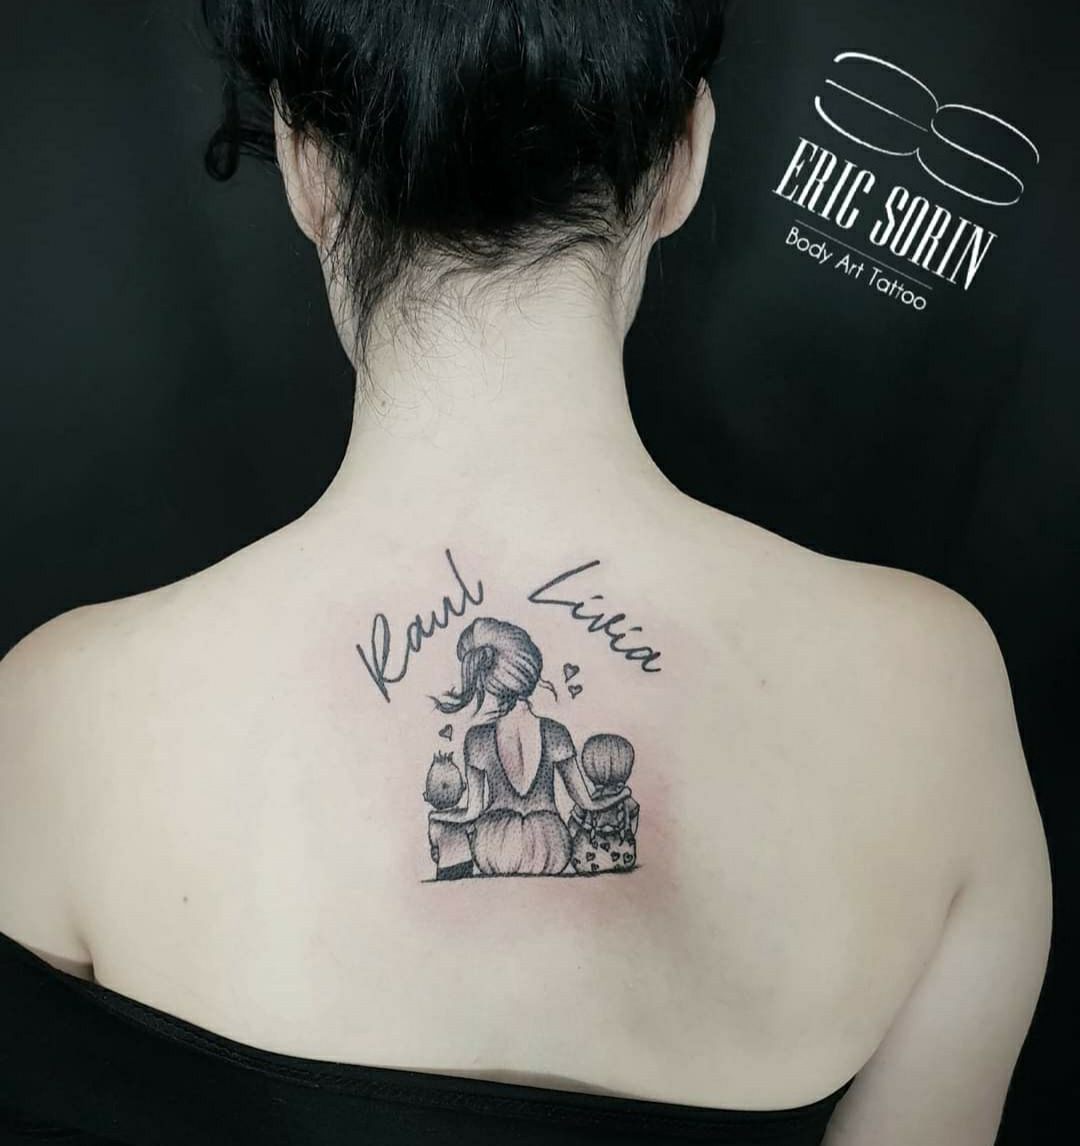 Tatuaje Constanța, Eric Sorin Tattoo salon profesional  !